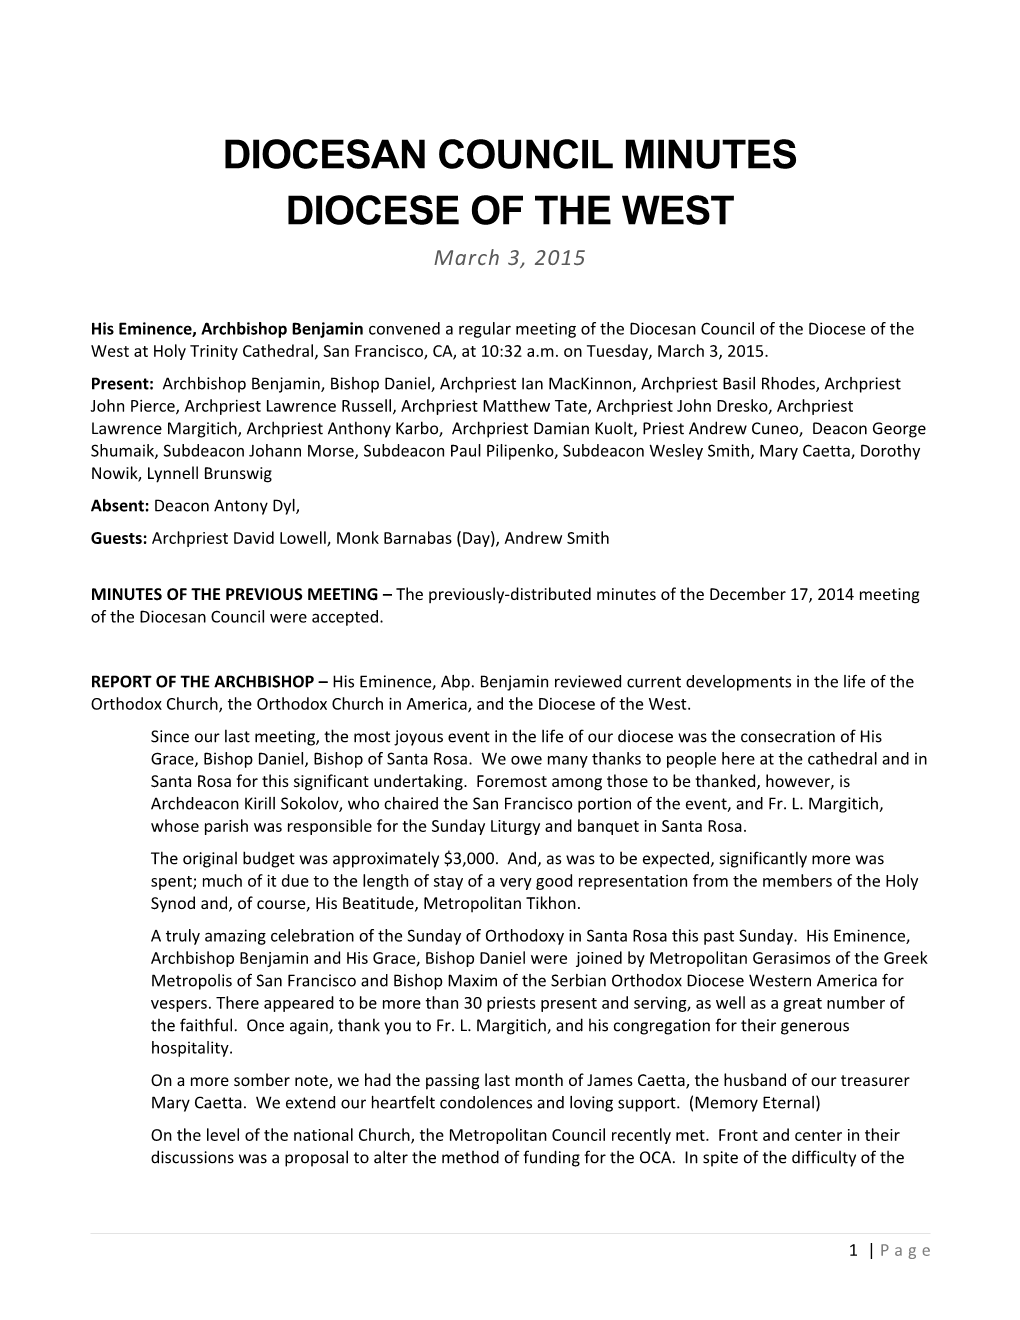 Diocesan Council Minutes